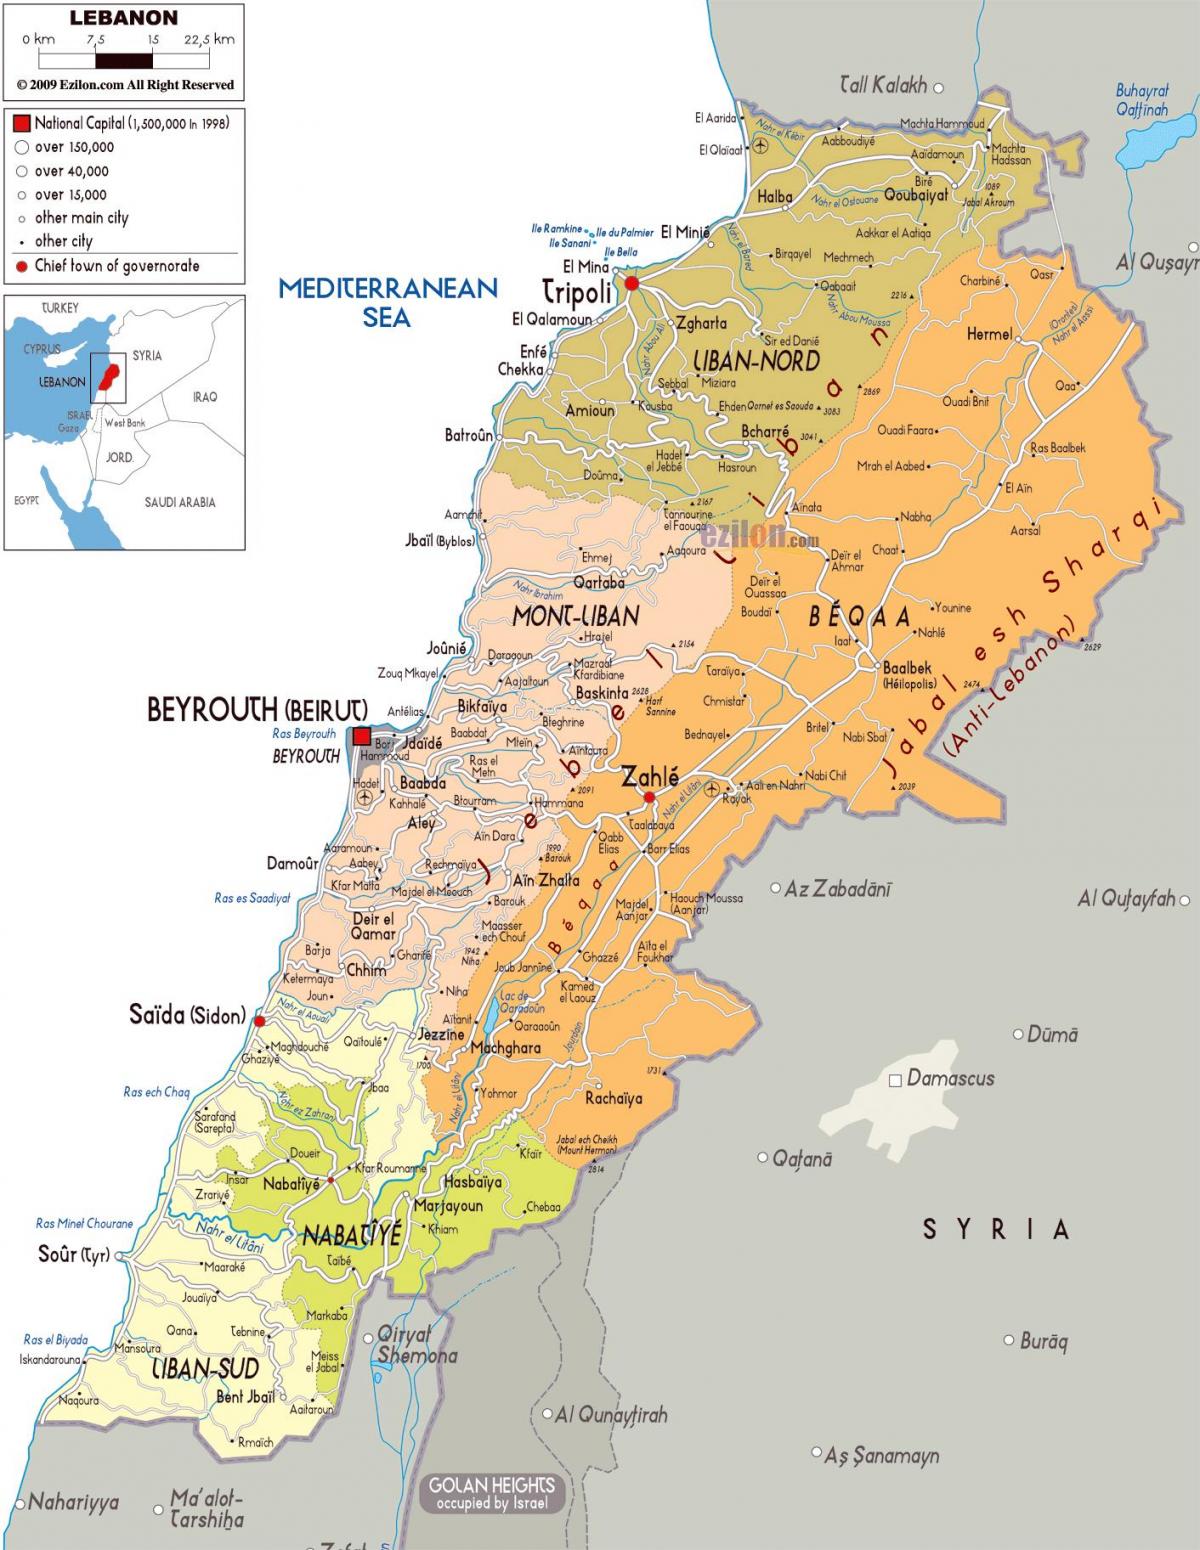 Lebanon peta terperinci